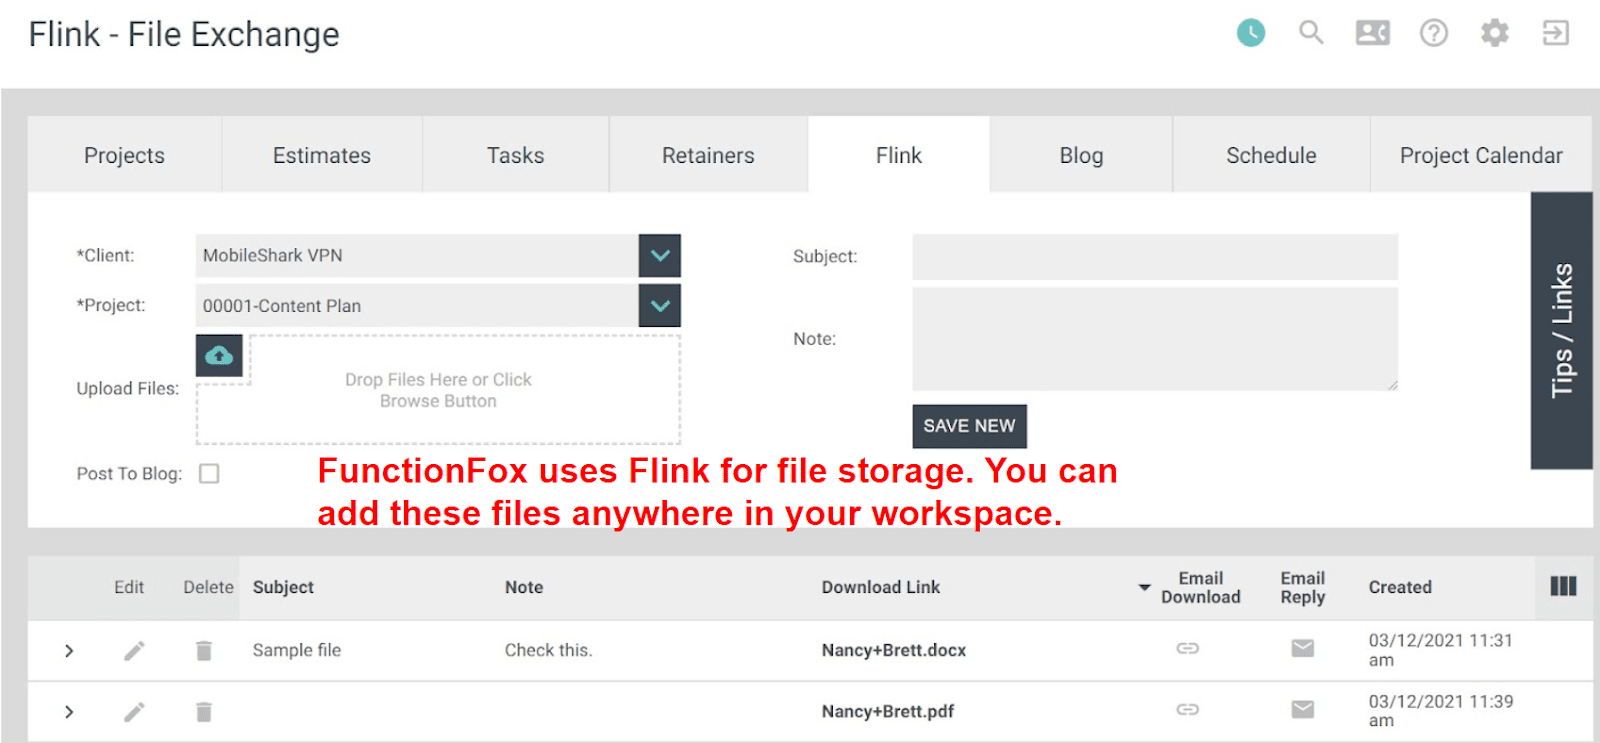 functionfox-sample-site-flink-file-exchange